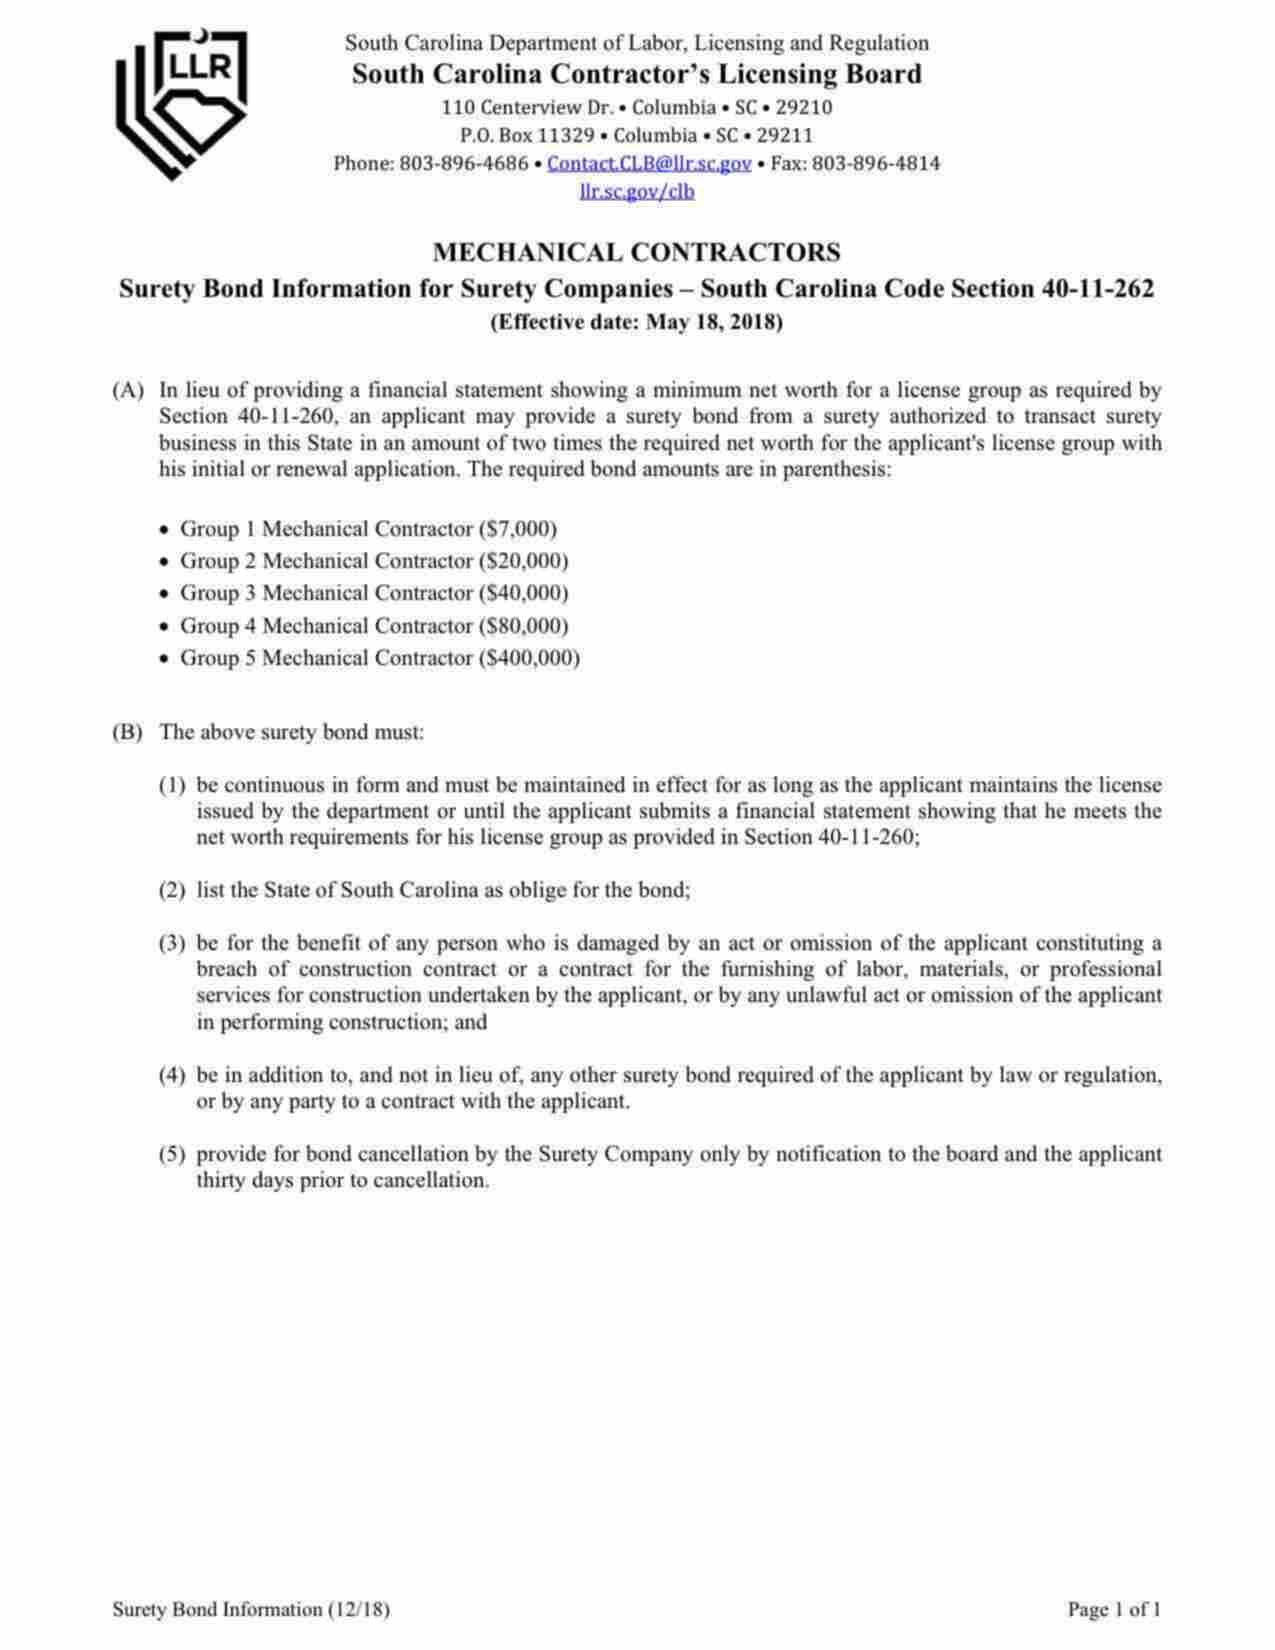 South Carolina Mechanical Contractor (Group 5) Bond Form